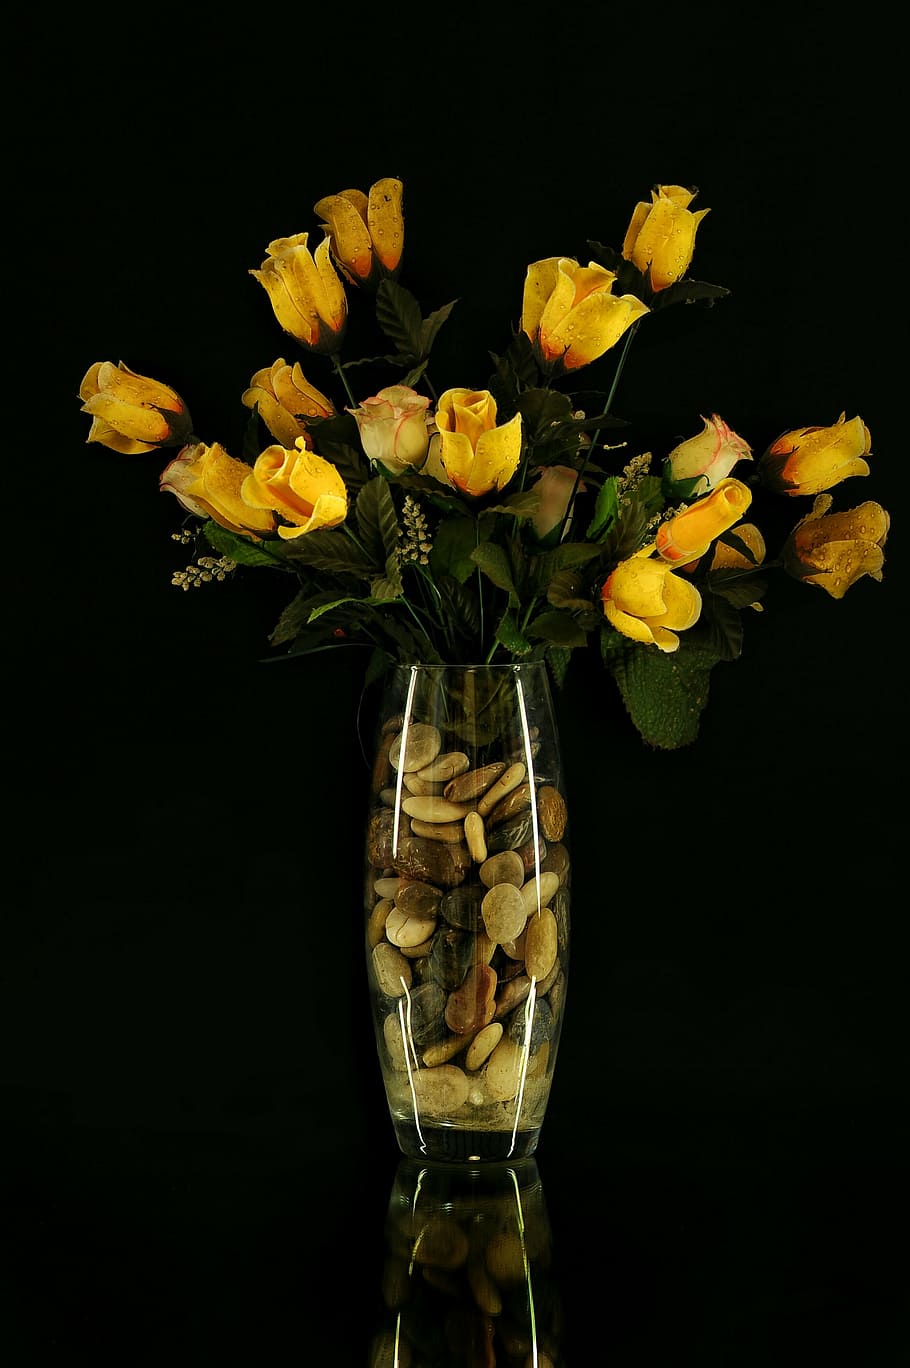 yellow petaled flowers, flowers, vase, sassi, dark, flower, vases, nature, petals, decoration